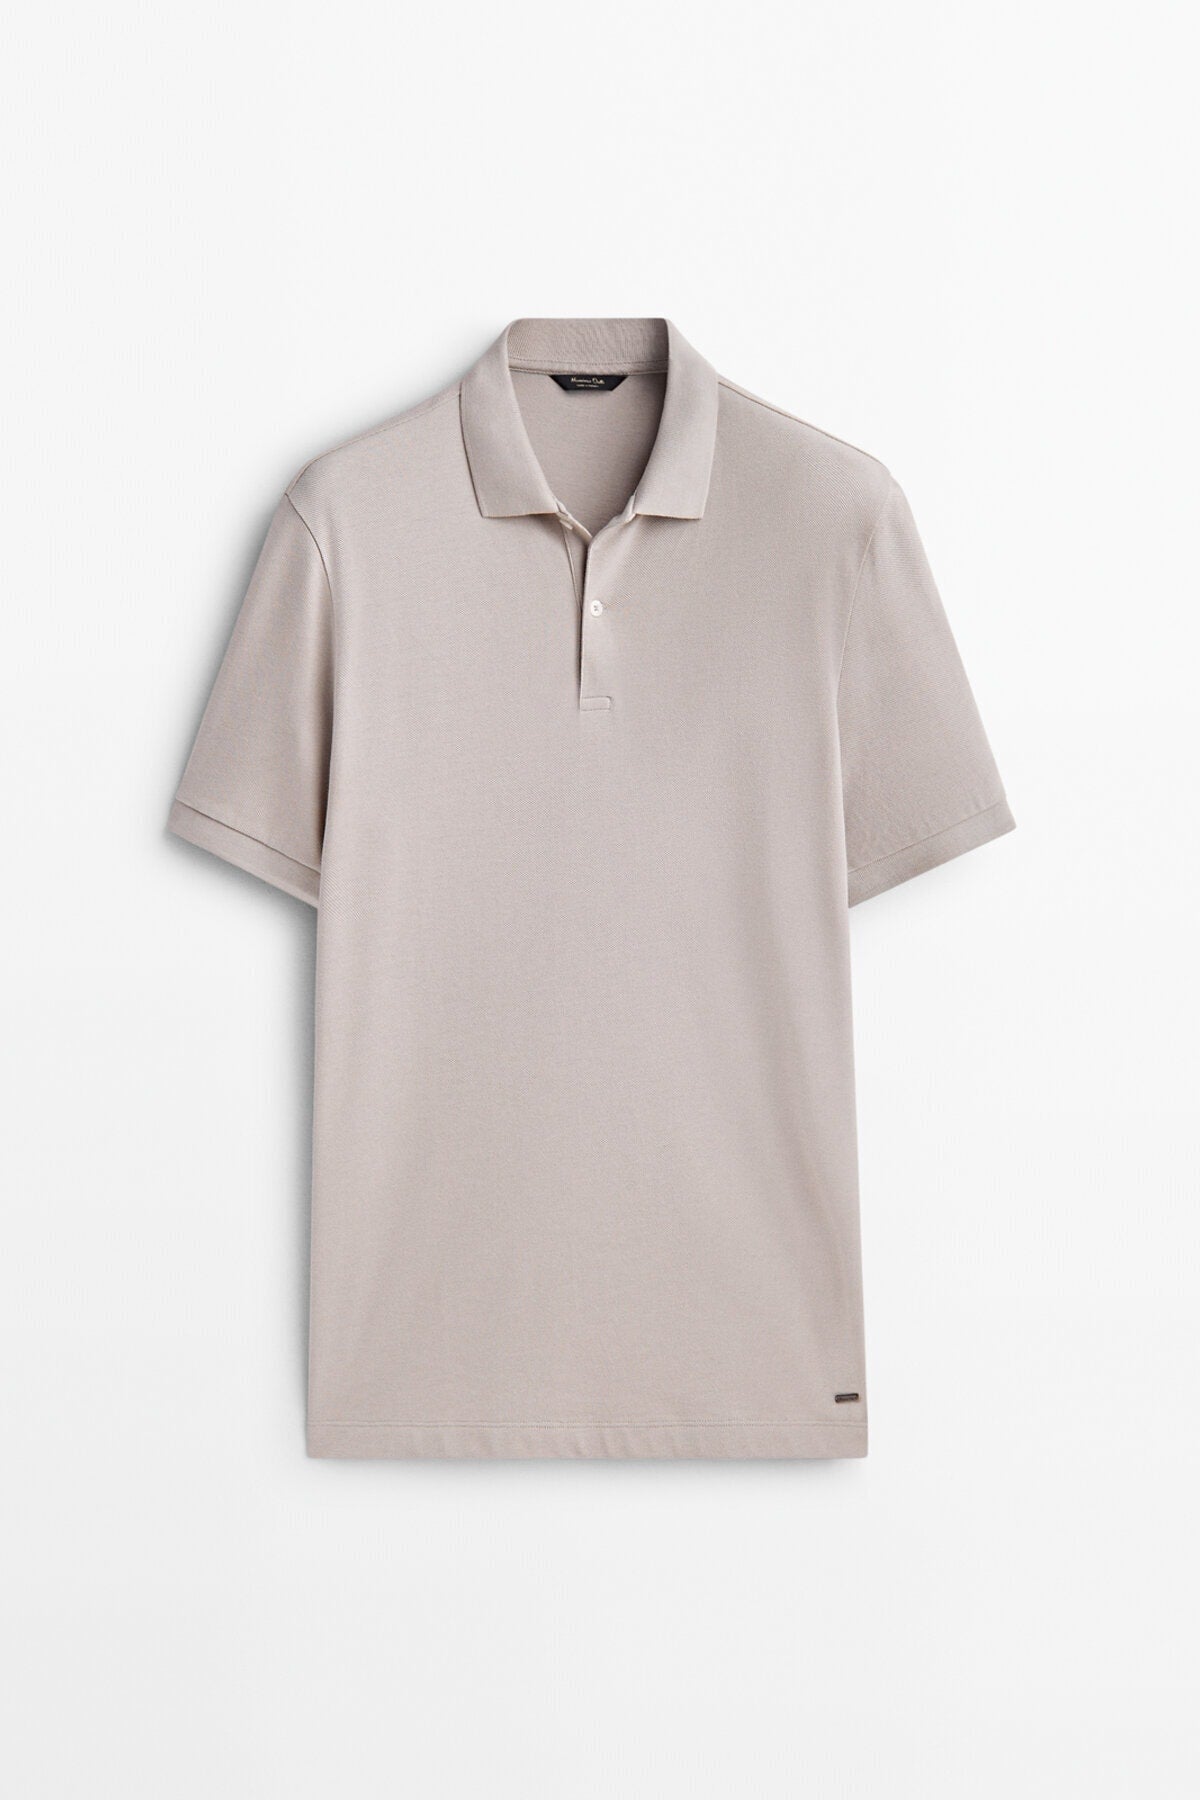 Textured 100% cotton polo t-shirt